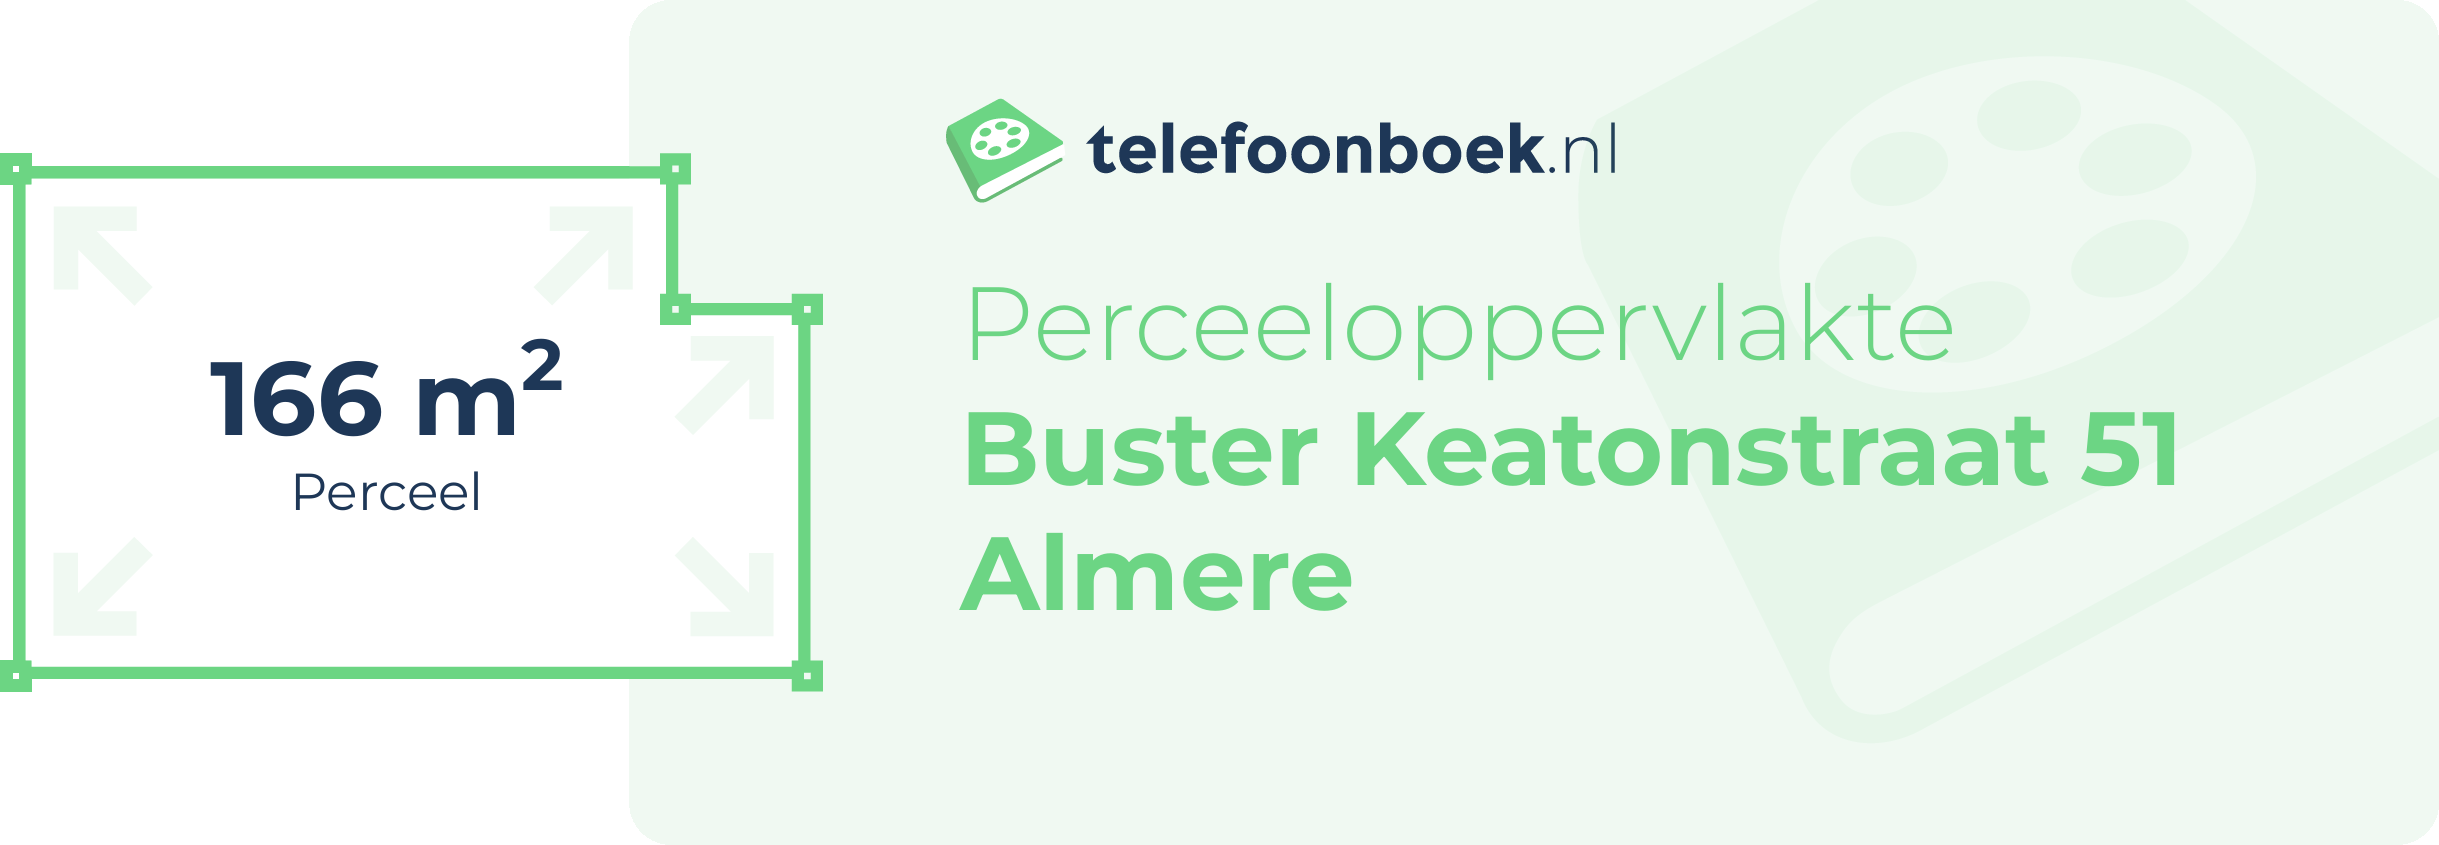 Perceeloppervlakte Buster Keatonstraat 51 Almere